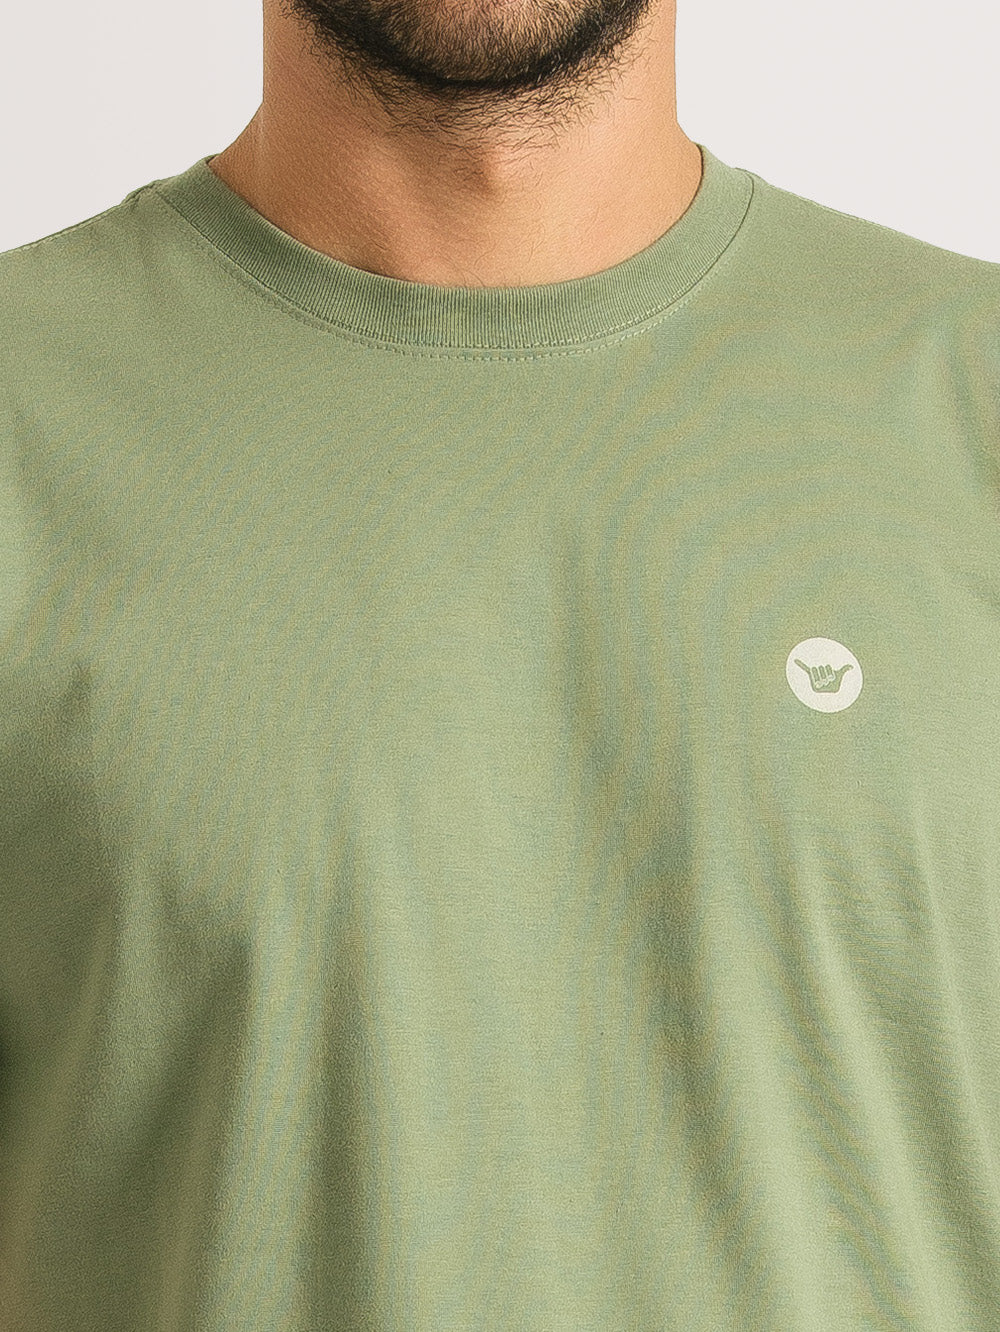 Camiseta Hang Loose  Minilogo G Verde